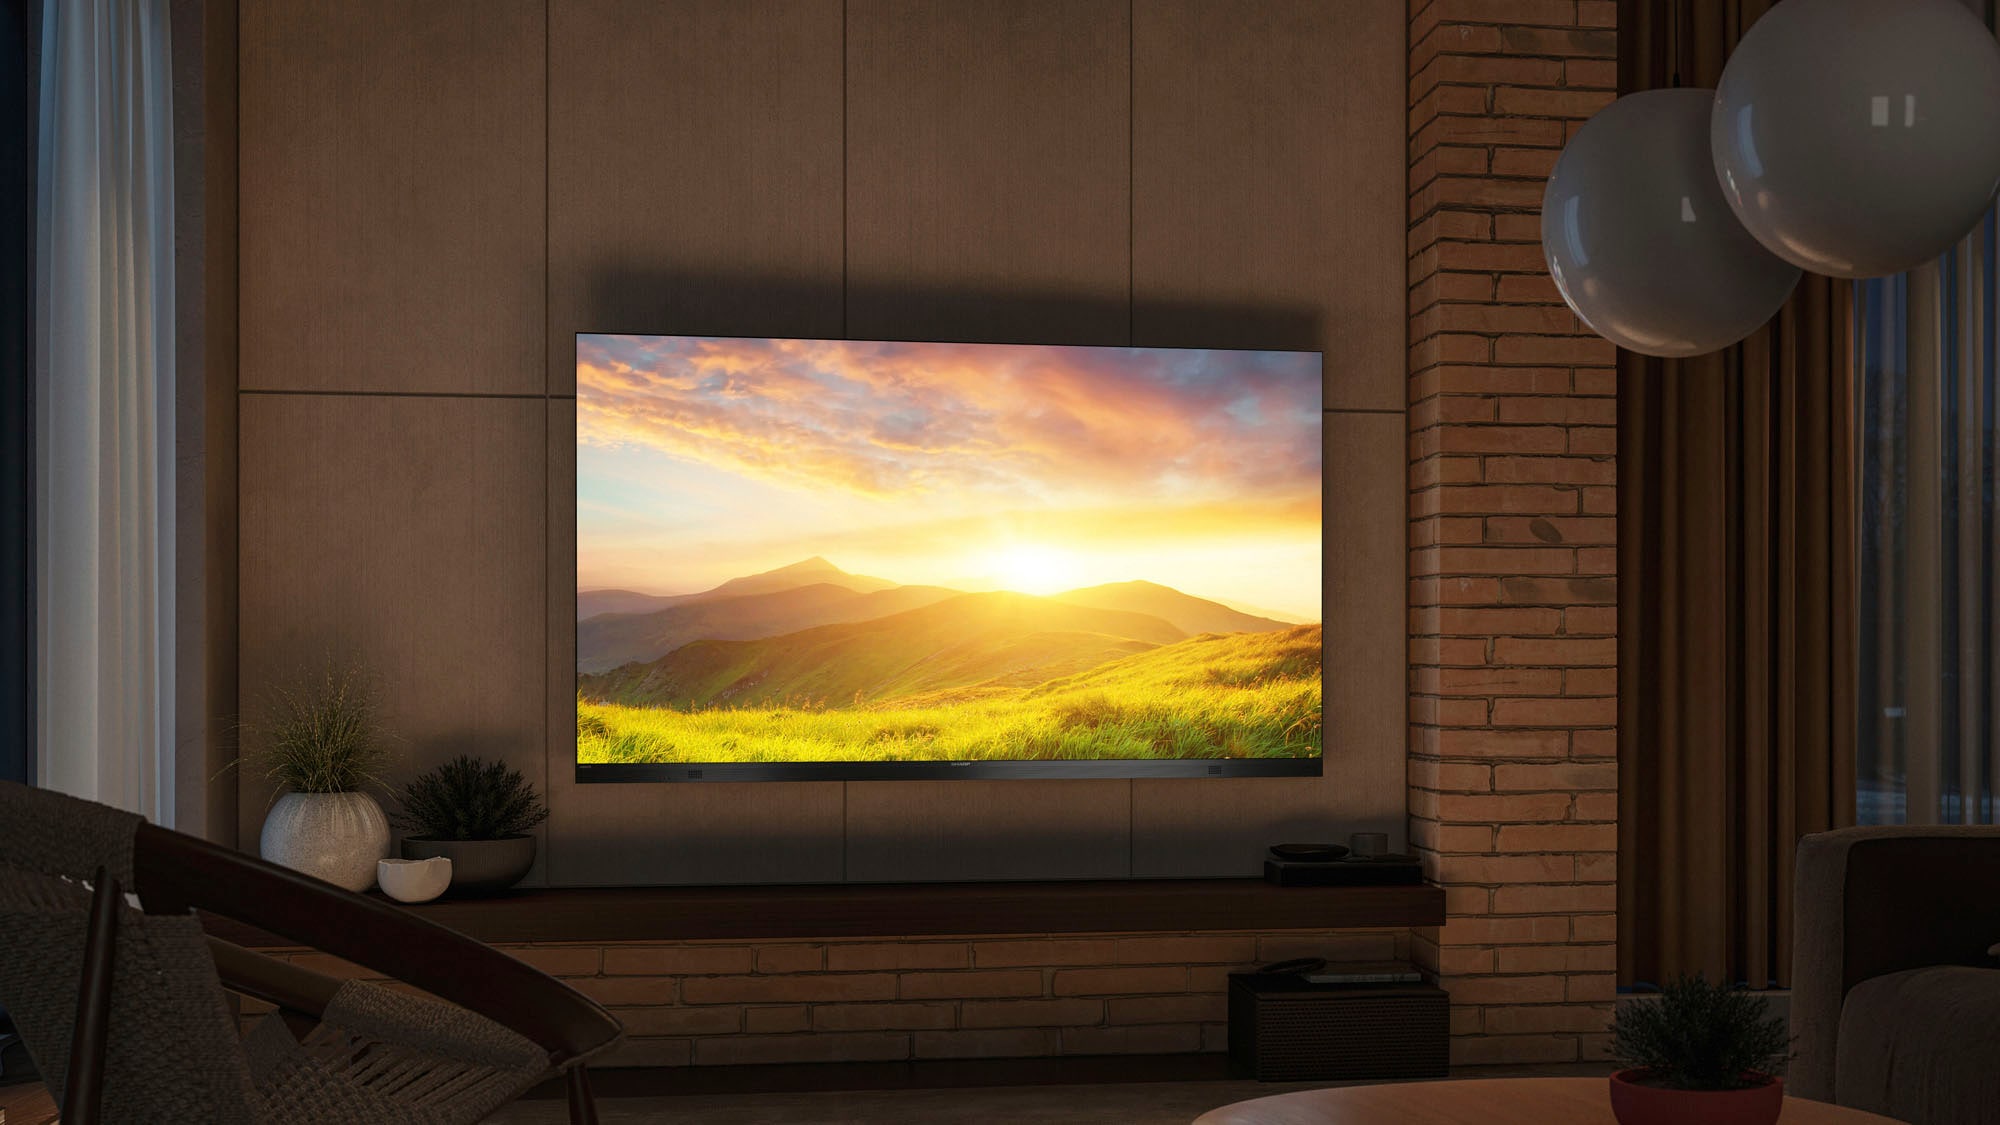 Sharp LED-Fernseher »4T-C55EQx«, 139 cm/55 Zoll, 4K Ultra HD, Smart-TV-Android  TV jetzt bestellen bei OTTO